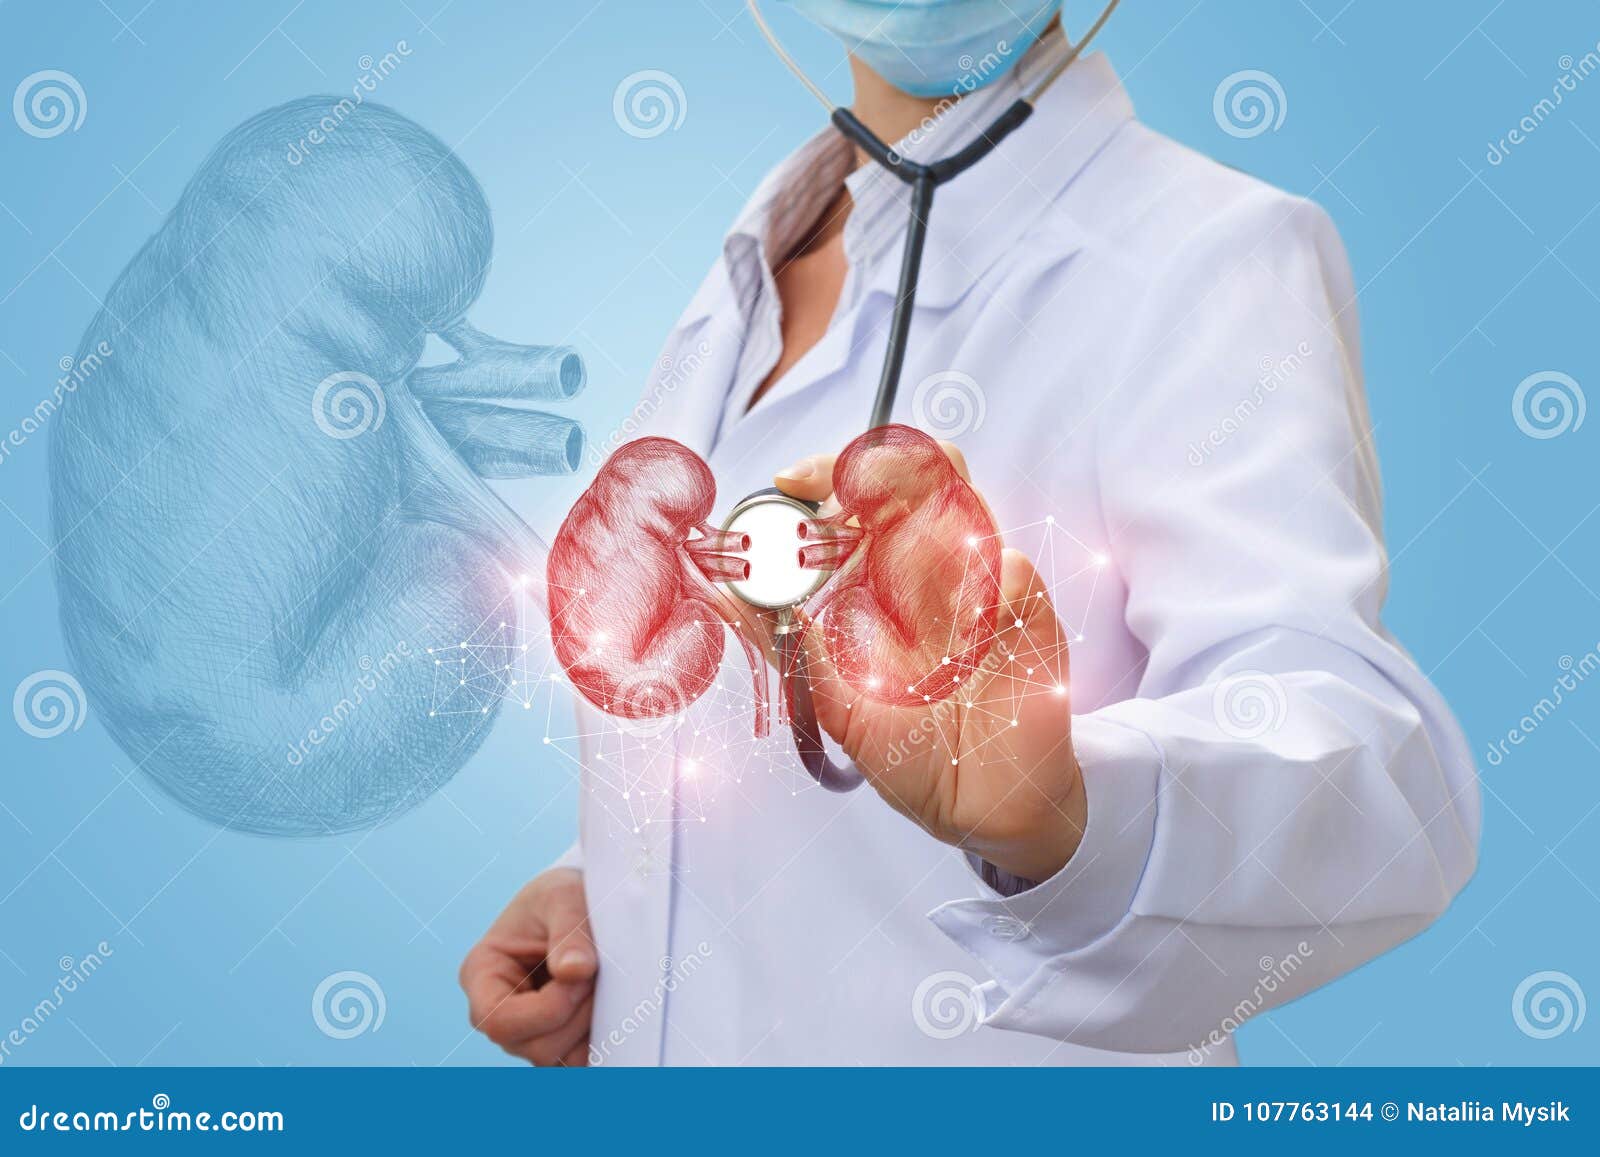 kidney doctor specialist